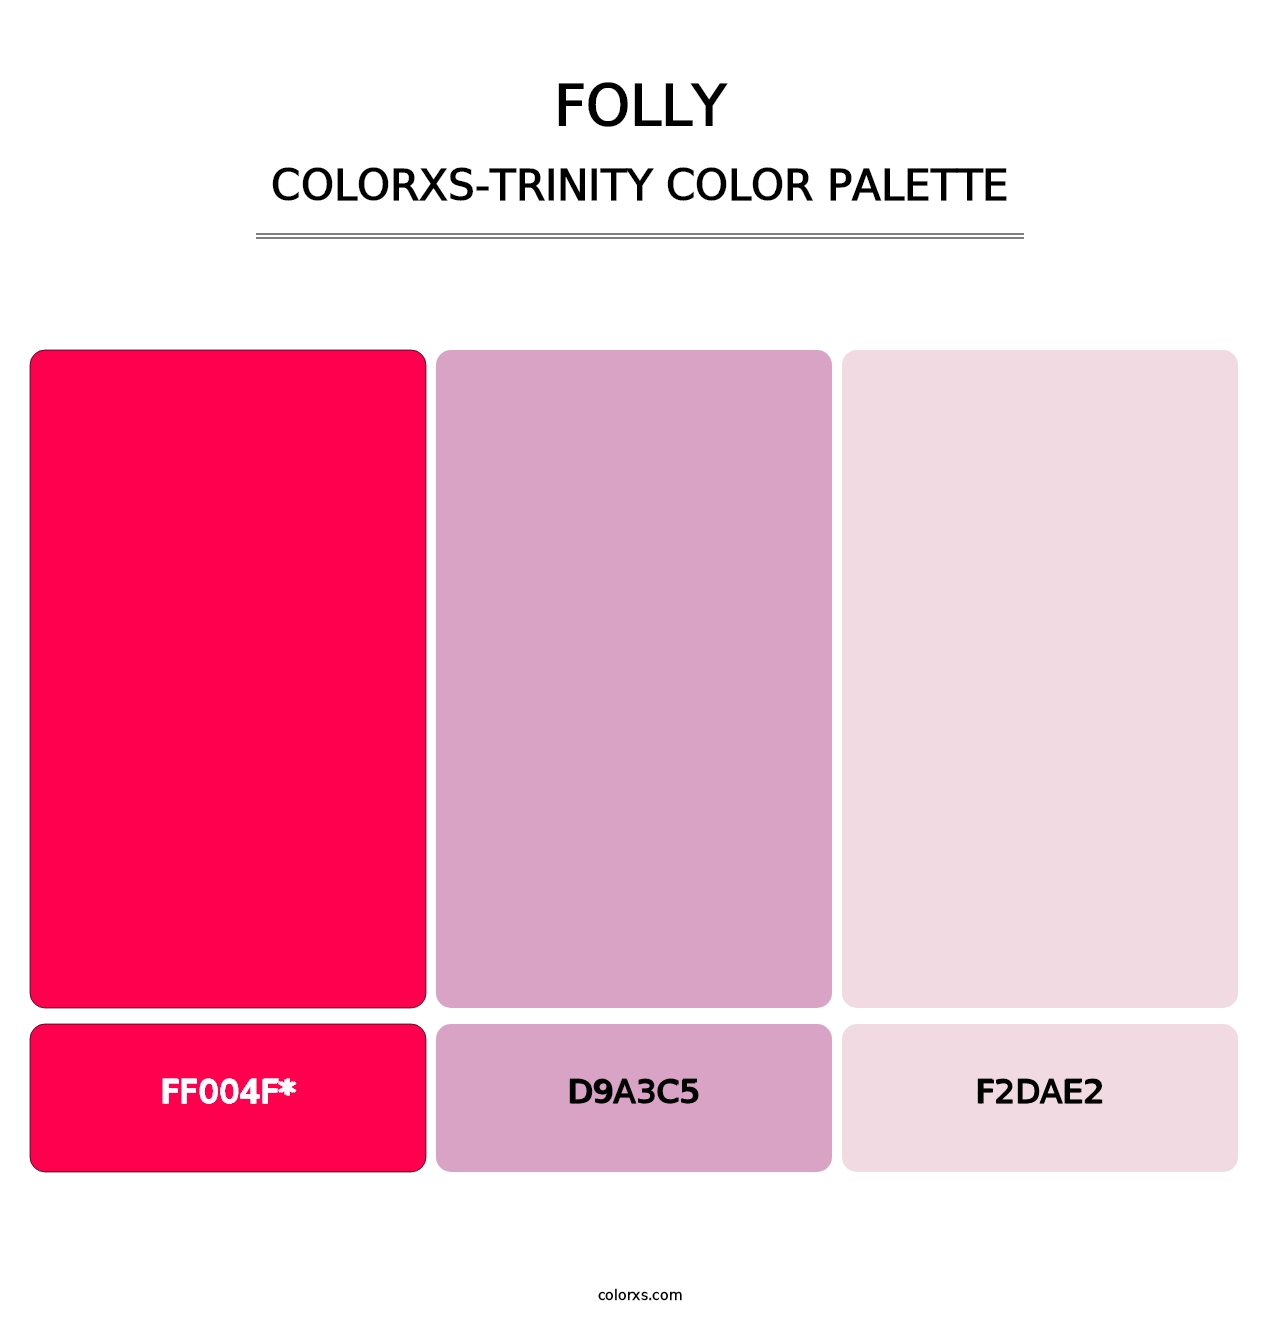 Folly - Colorxs Trinity Palette